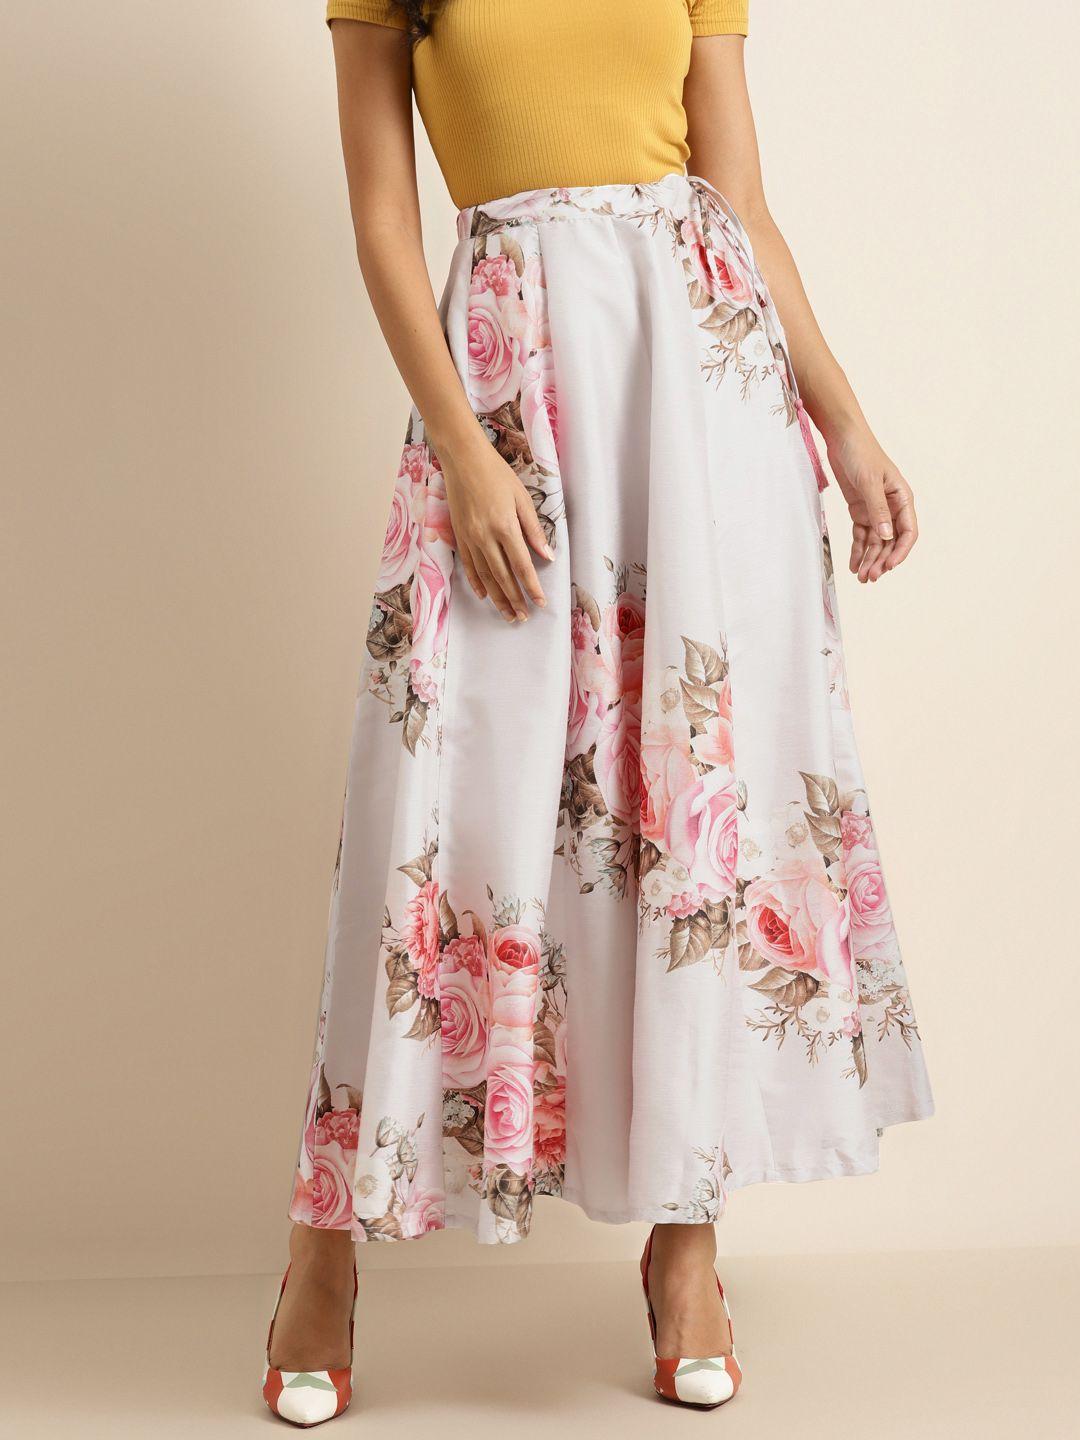 shae by sassafras grey & pink floral print flared maxi skirt